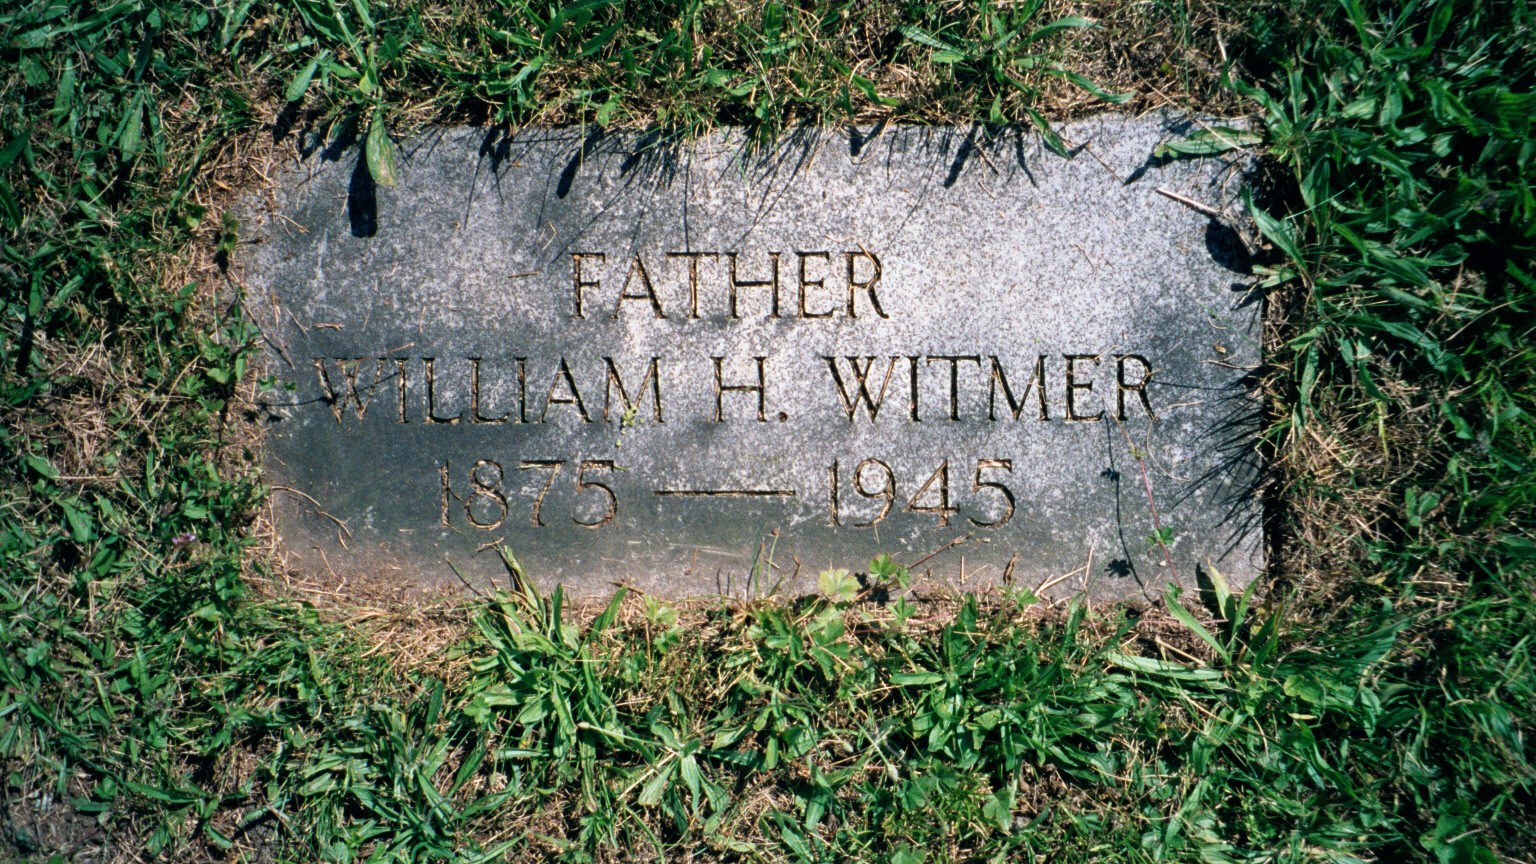  William Henry WITMER